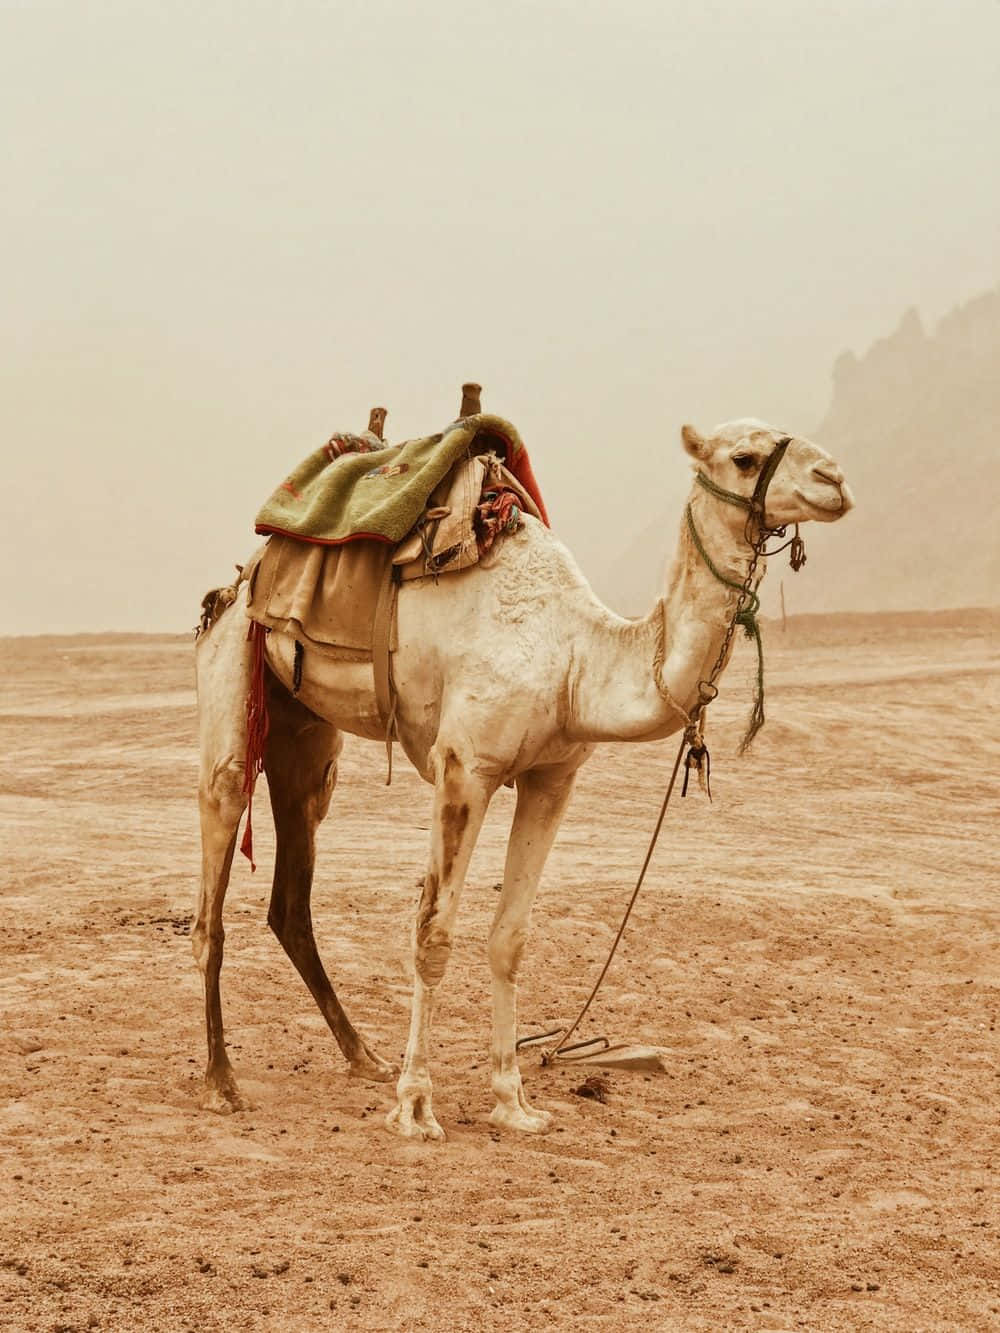 An Egyptian Camel Relaxing in the Desert